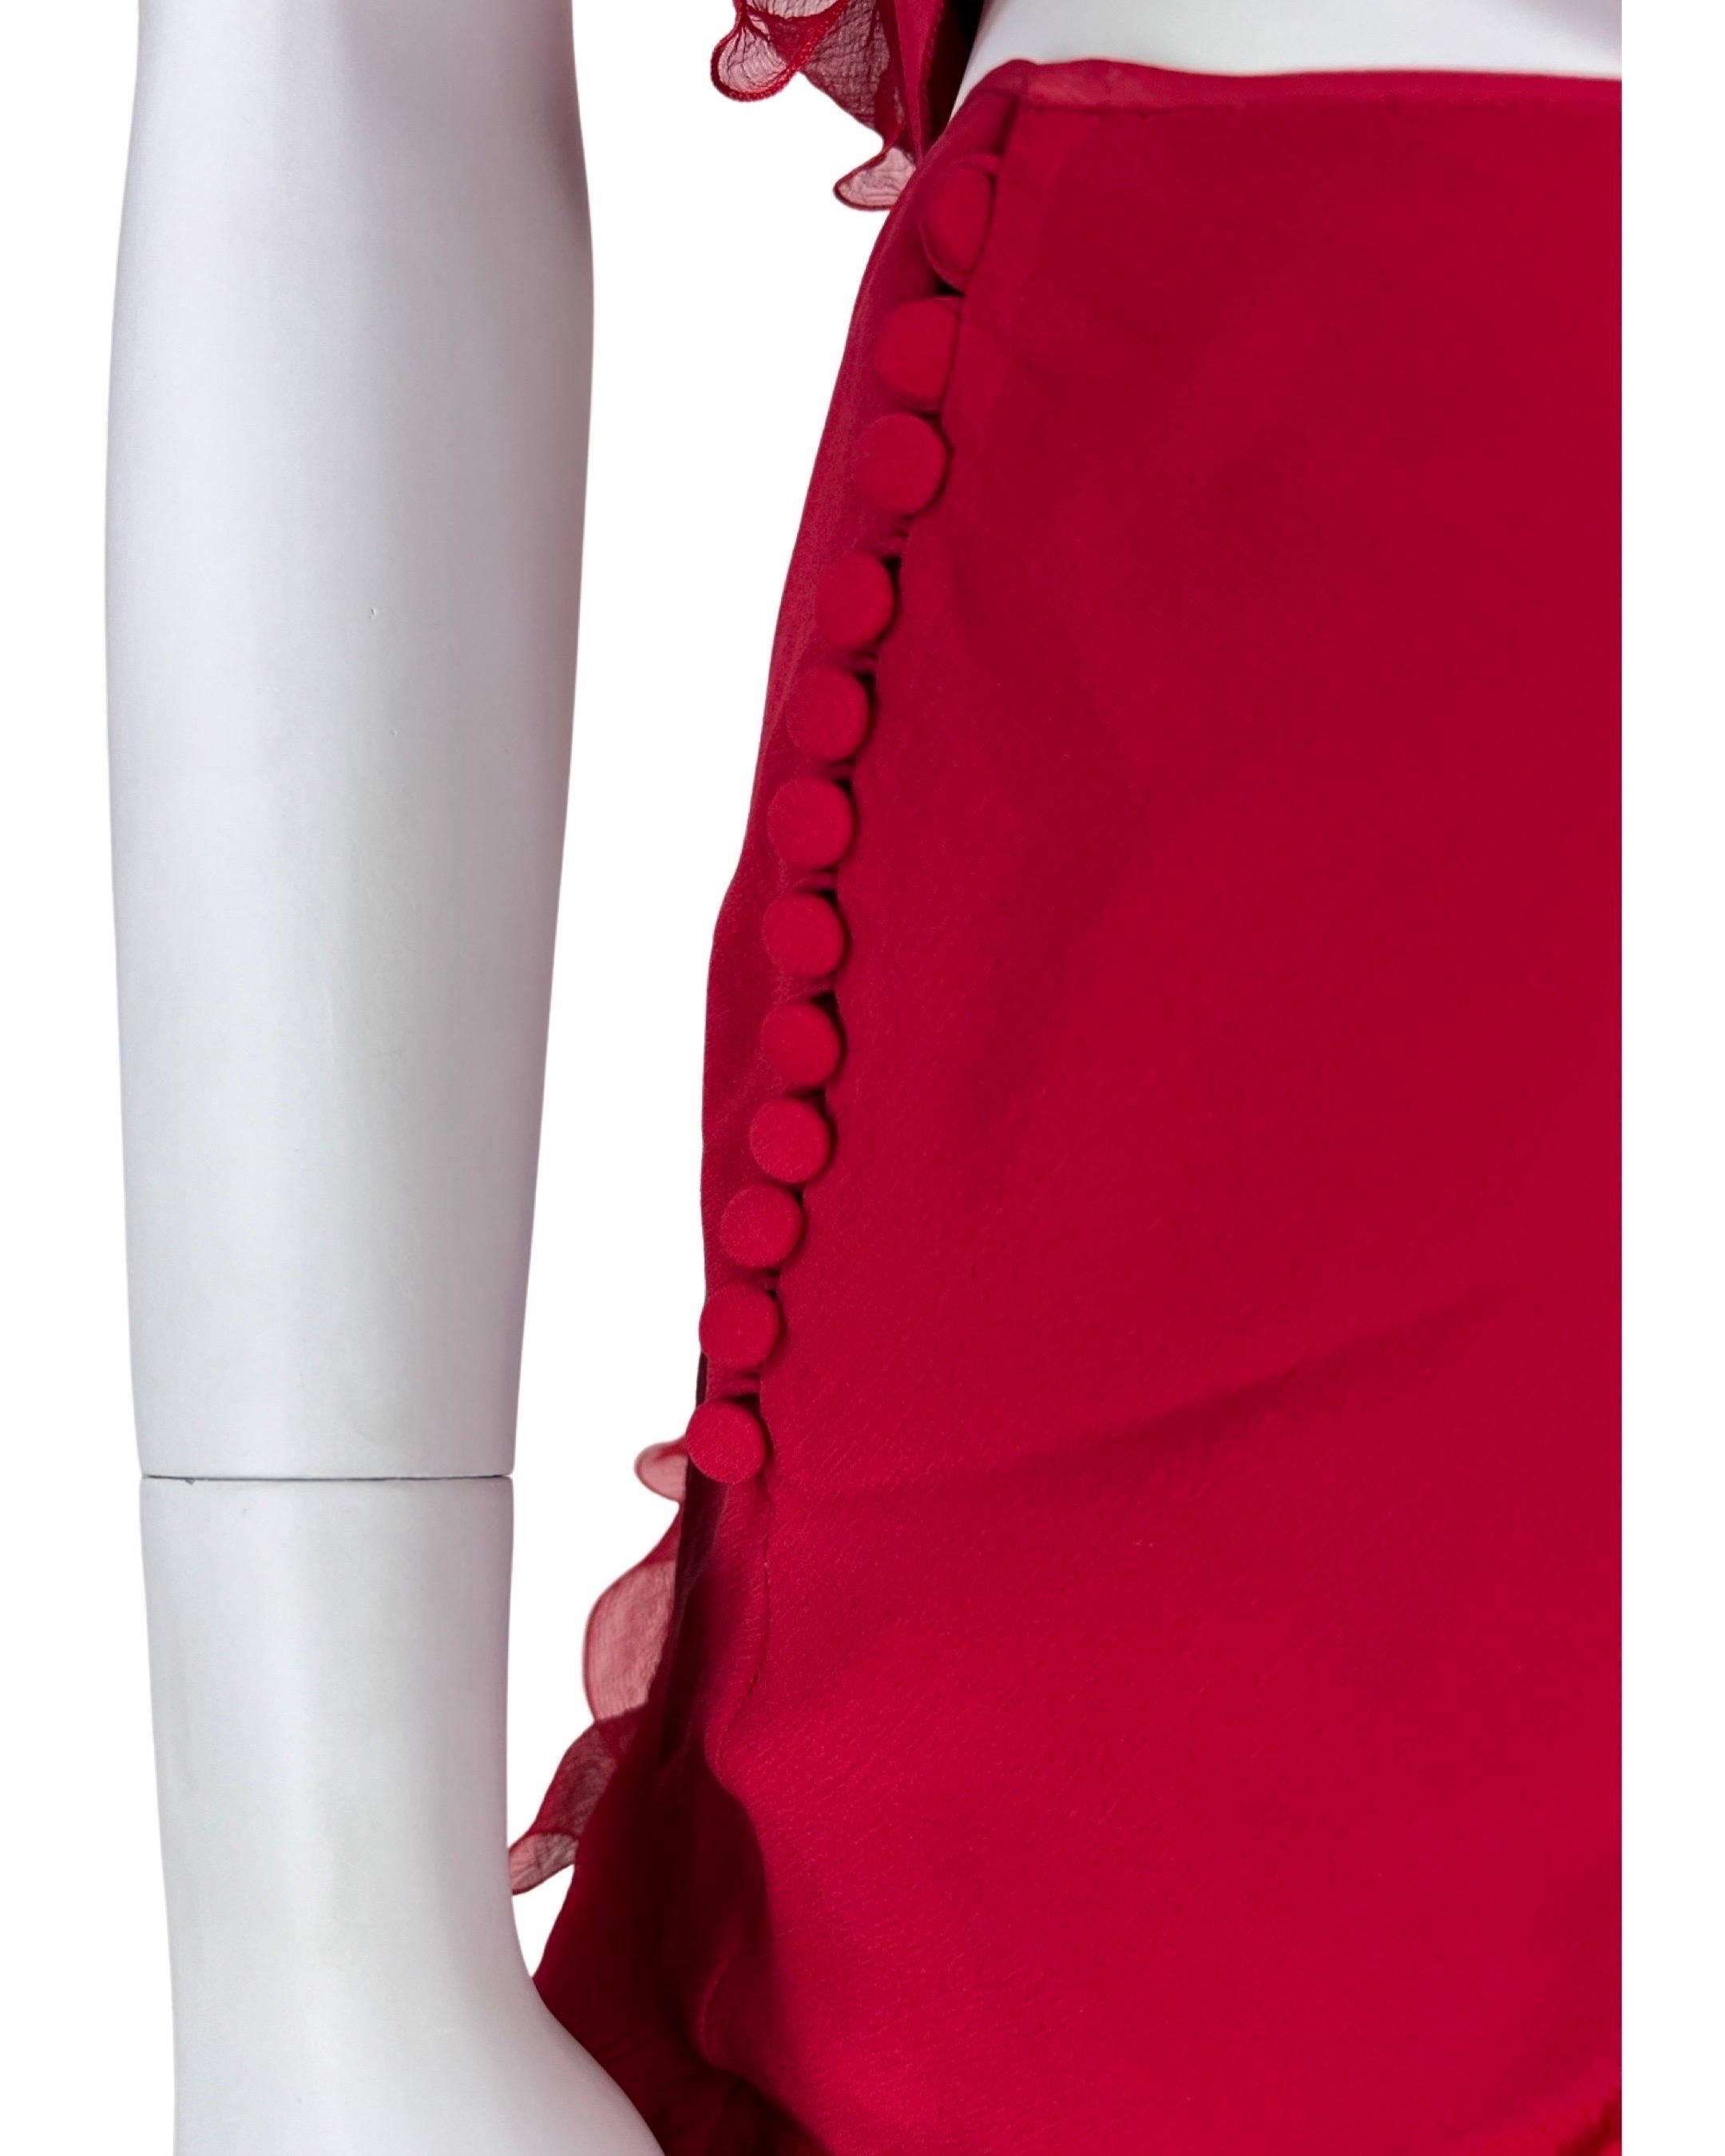 Dior by John Galliano Fall 2004 Red Ruffled Silk Set 6